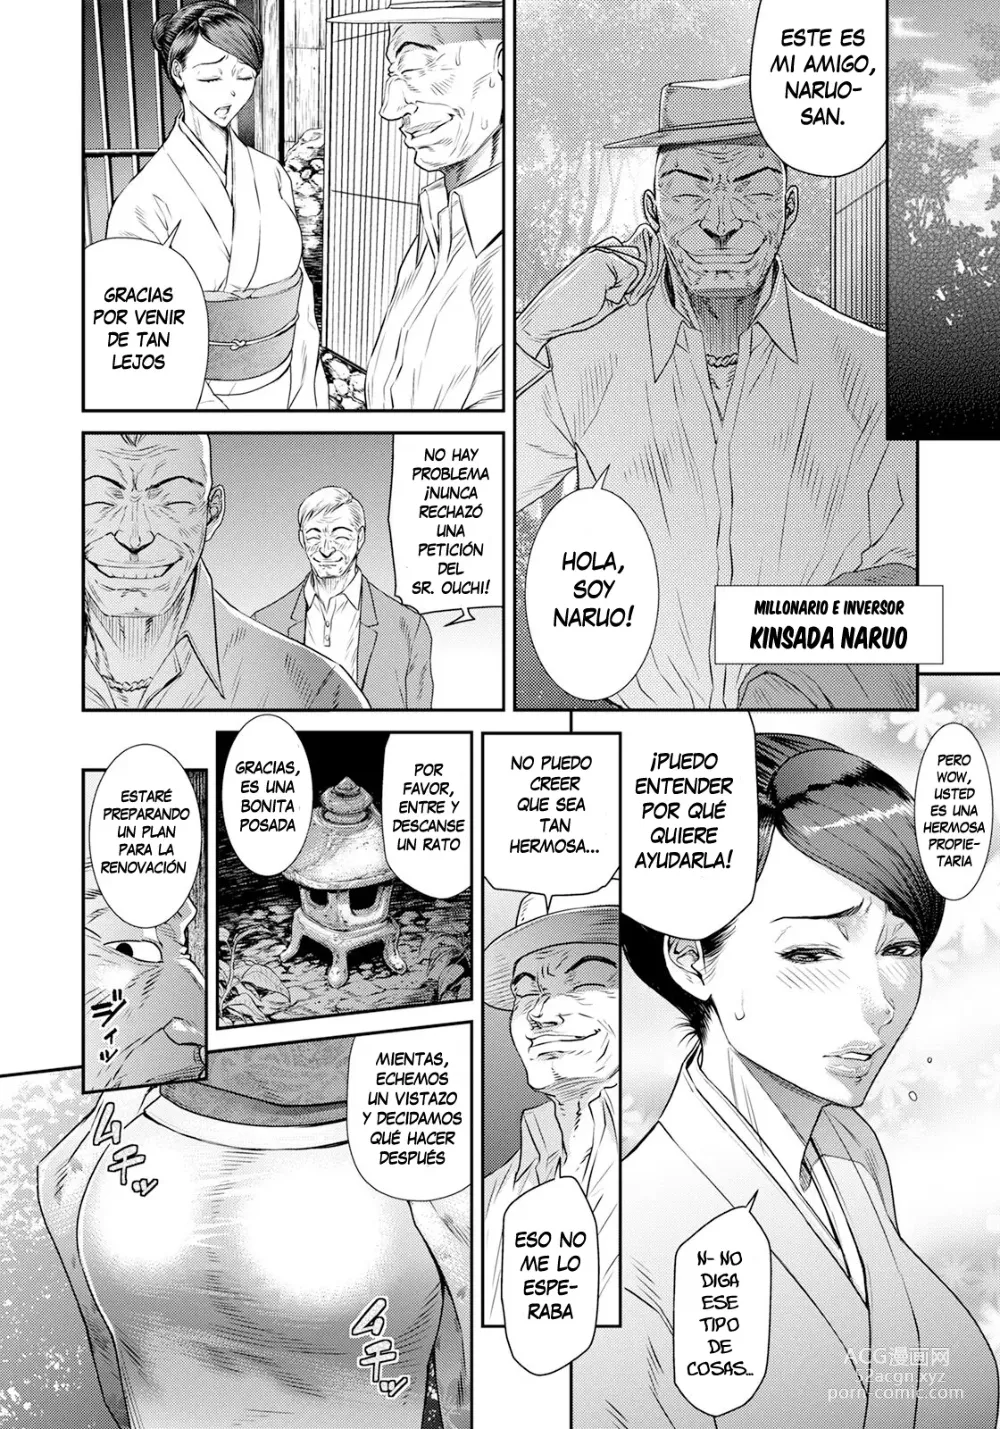 Page 4 of manga Shinise Ryokan